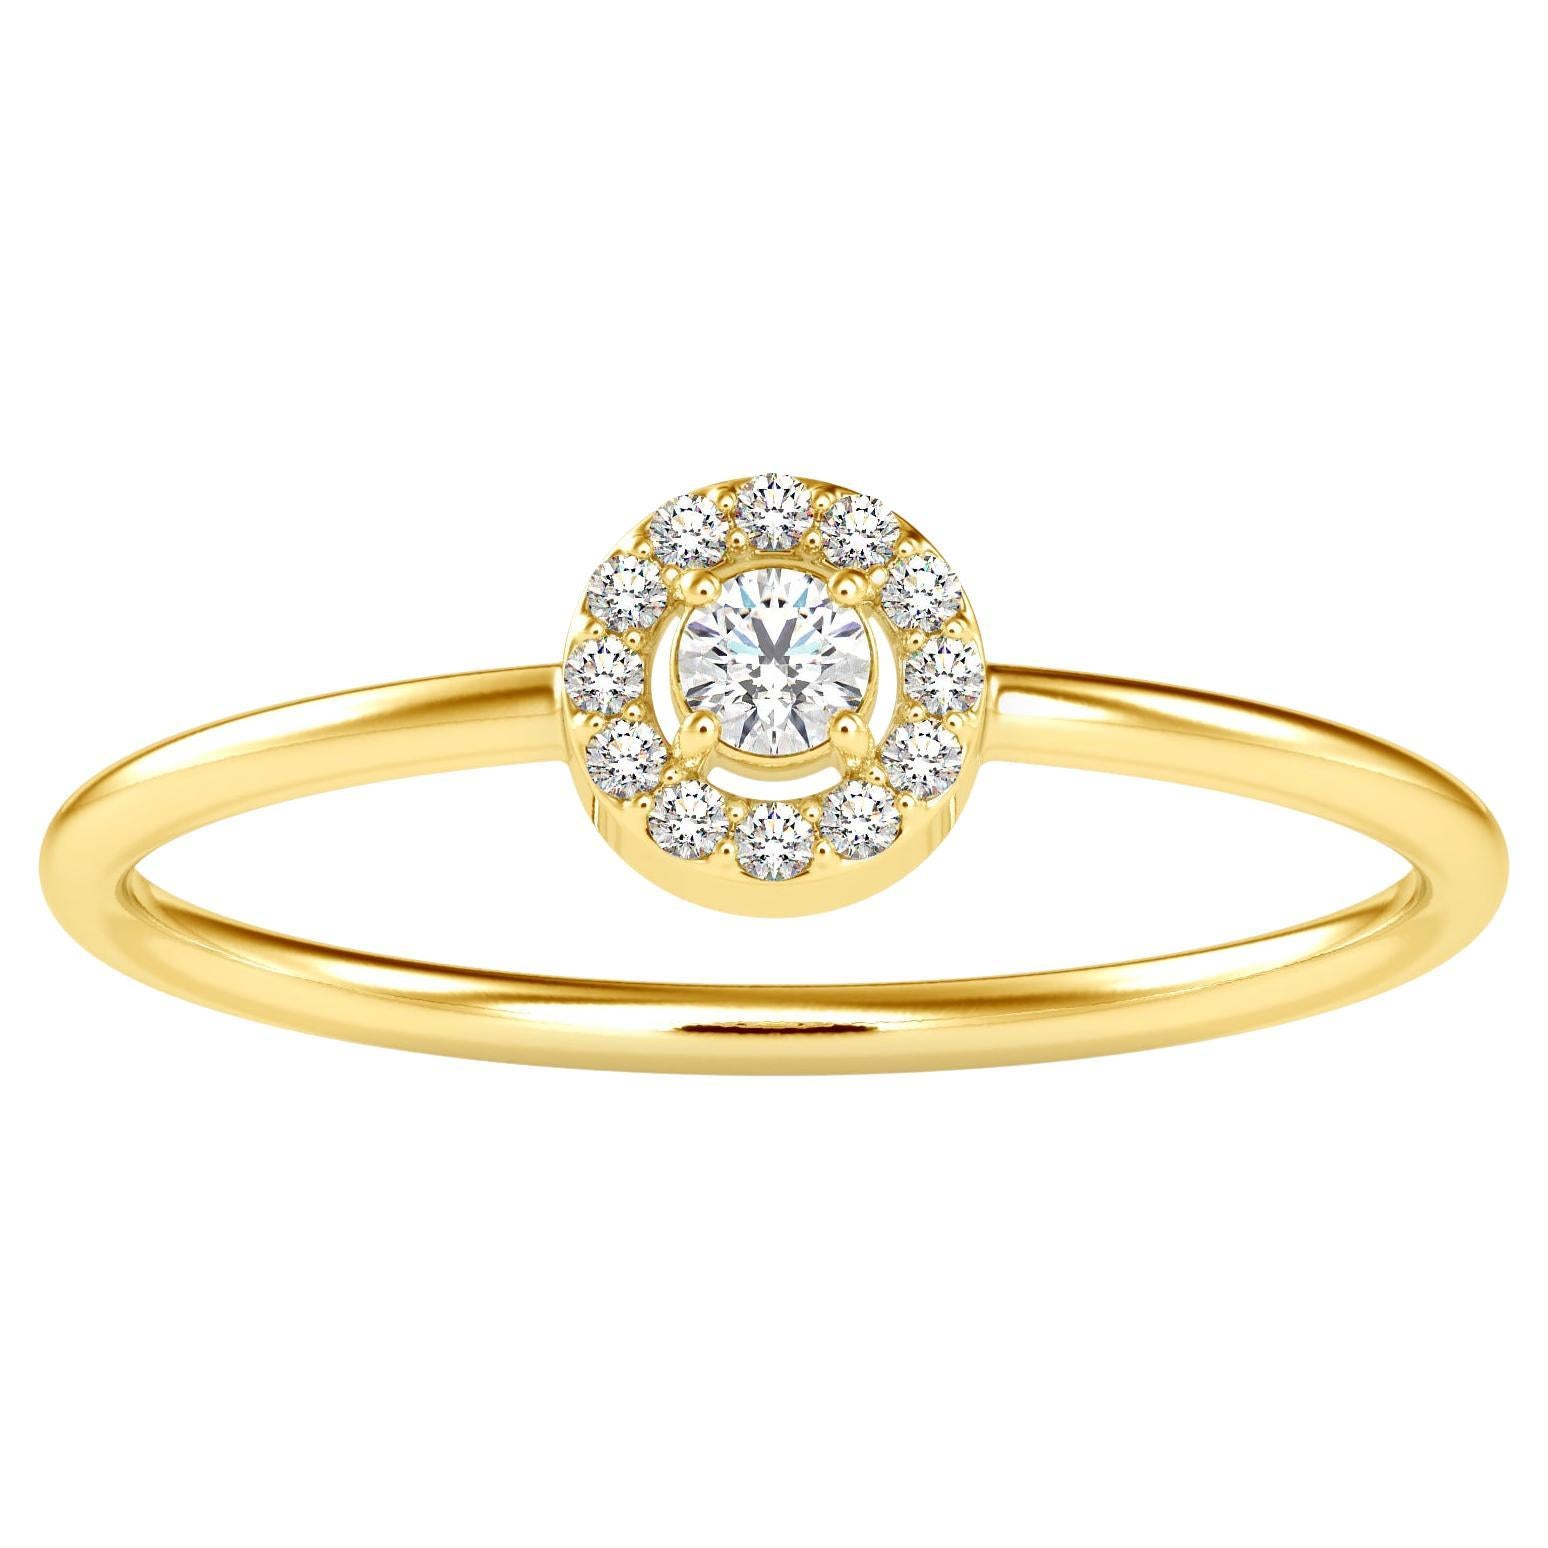 0.11 Carat Diamond 14K Yellow Gold Ring